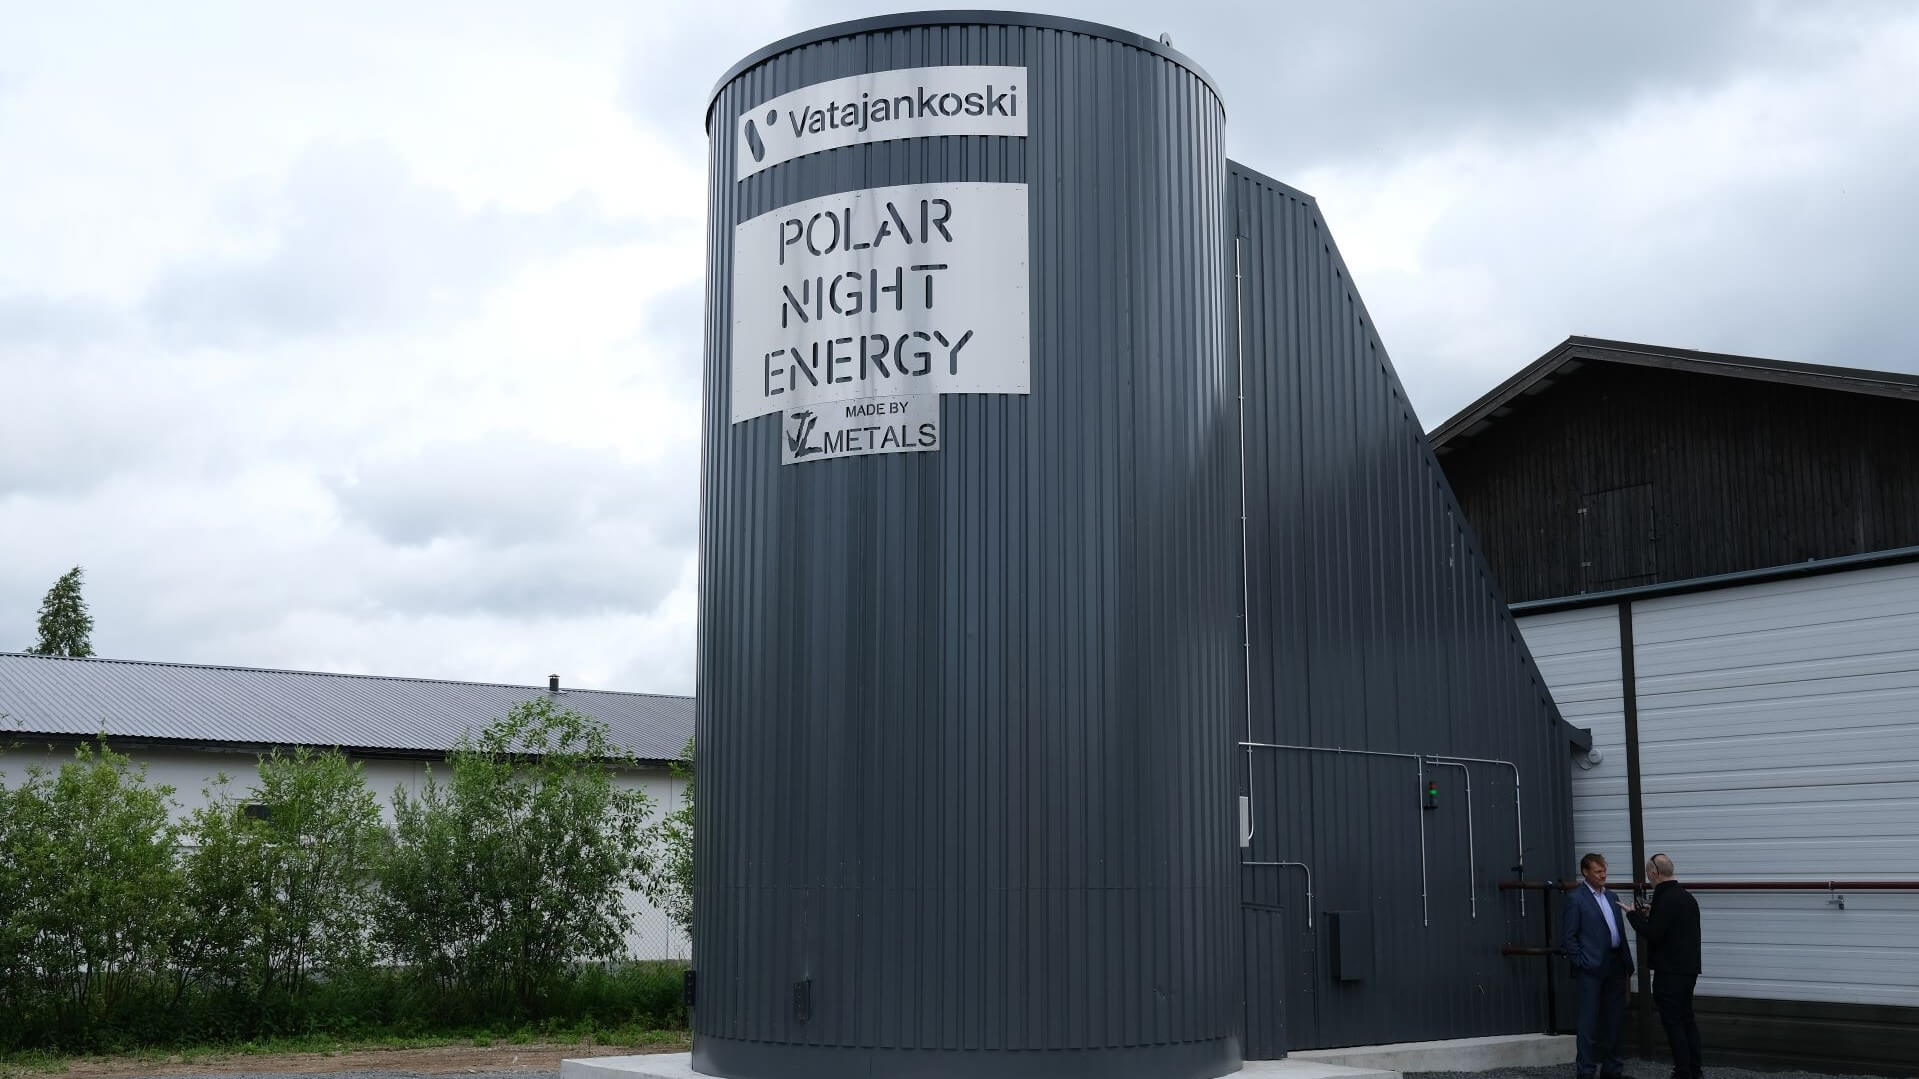 Polar Night Energy building, Finland